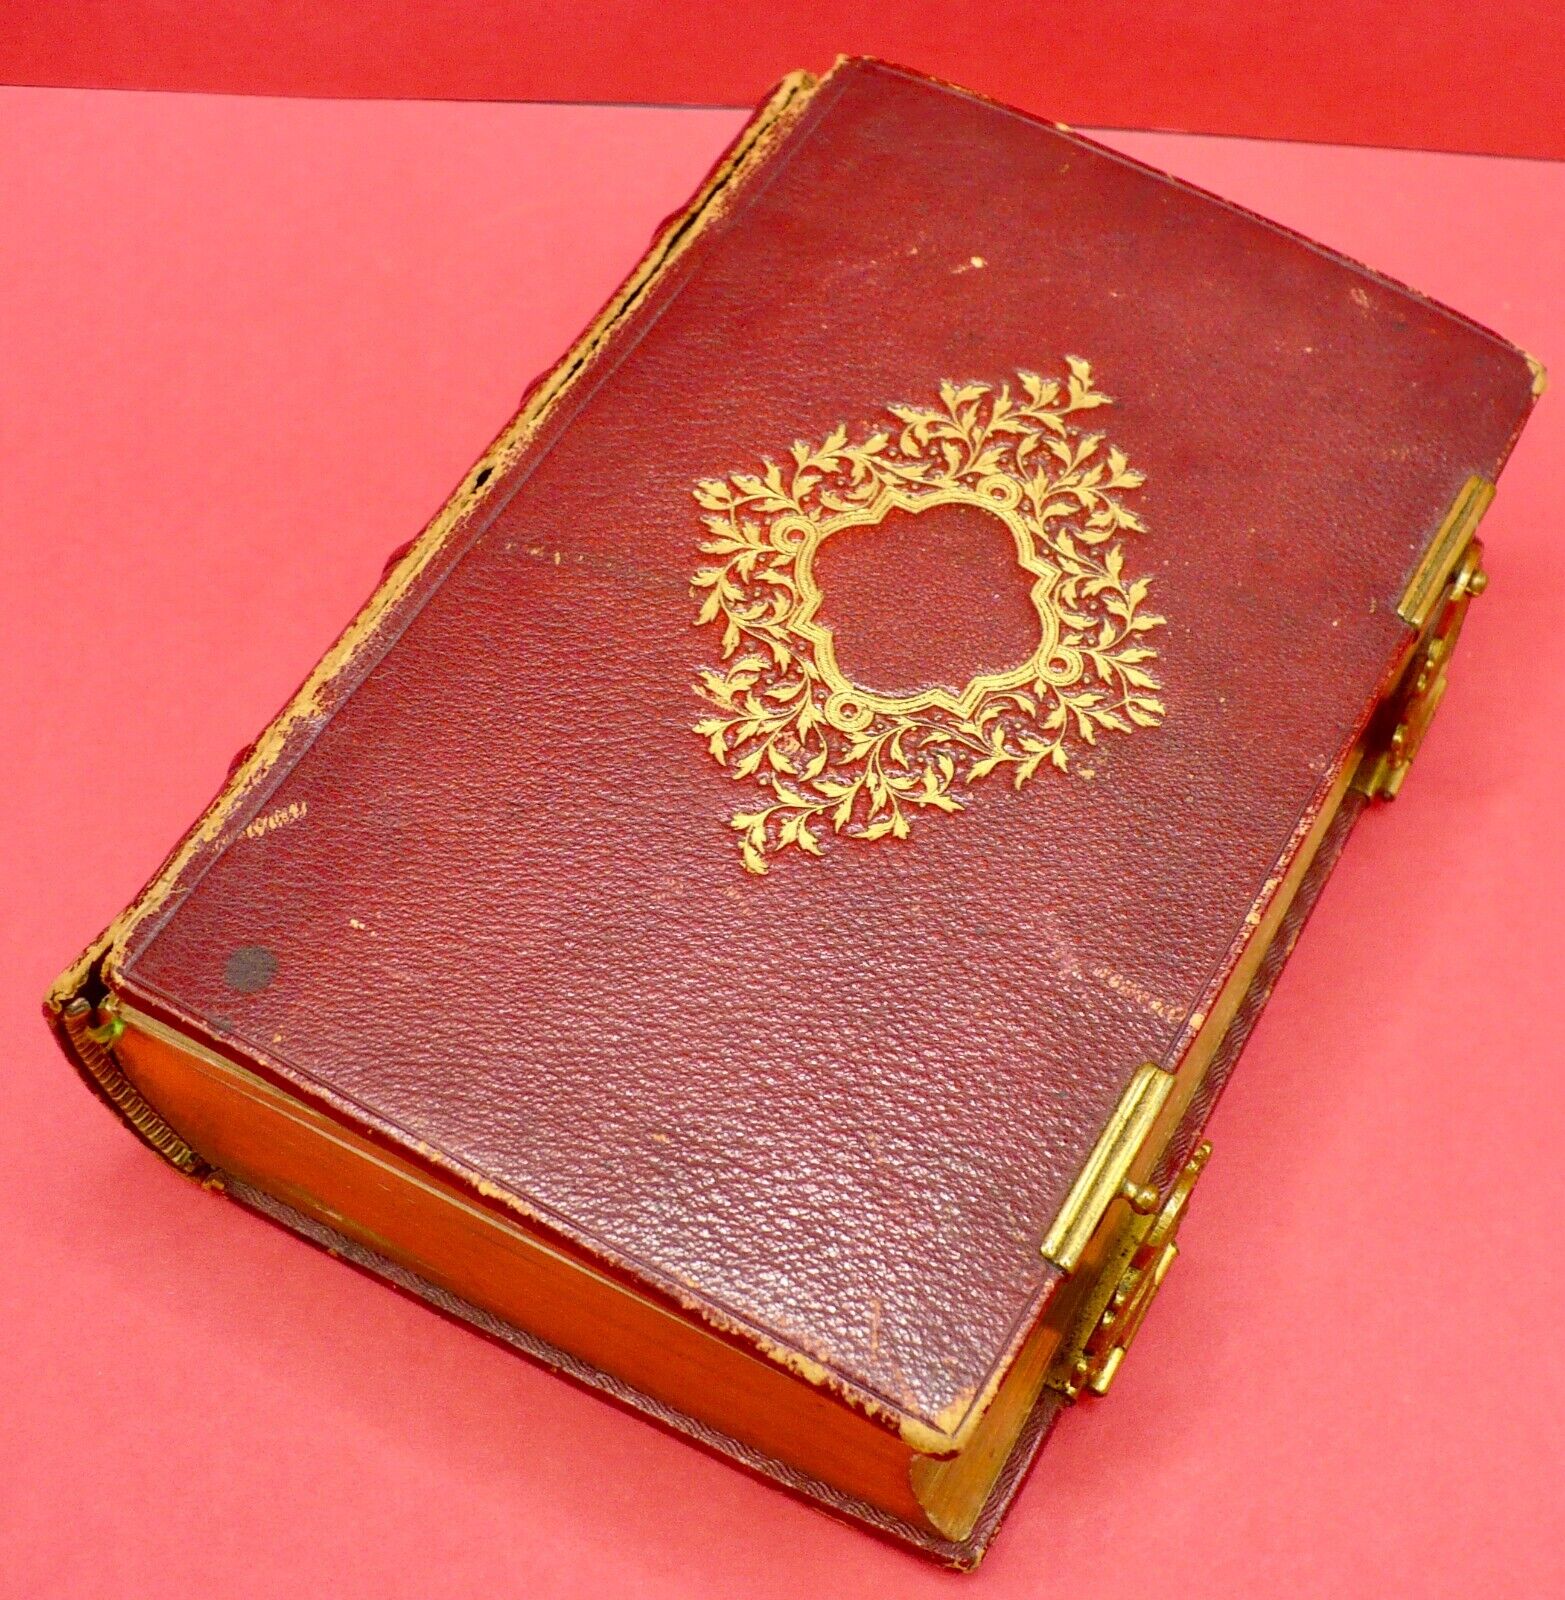 Paroissien Romain French & Latin Chatillon Sur Seine Gold Edge Pages Red Leather